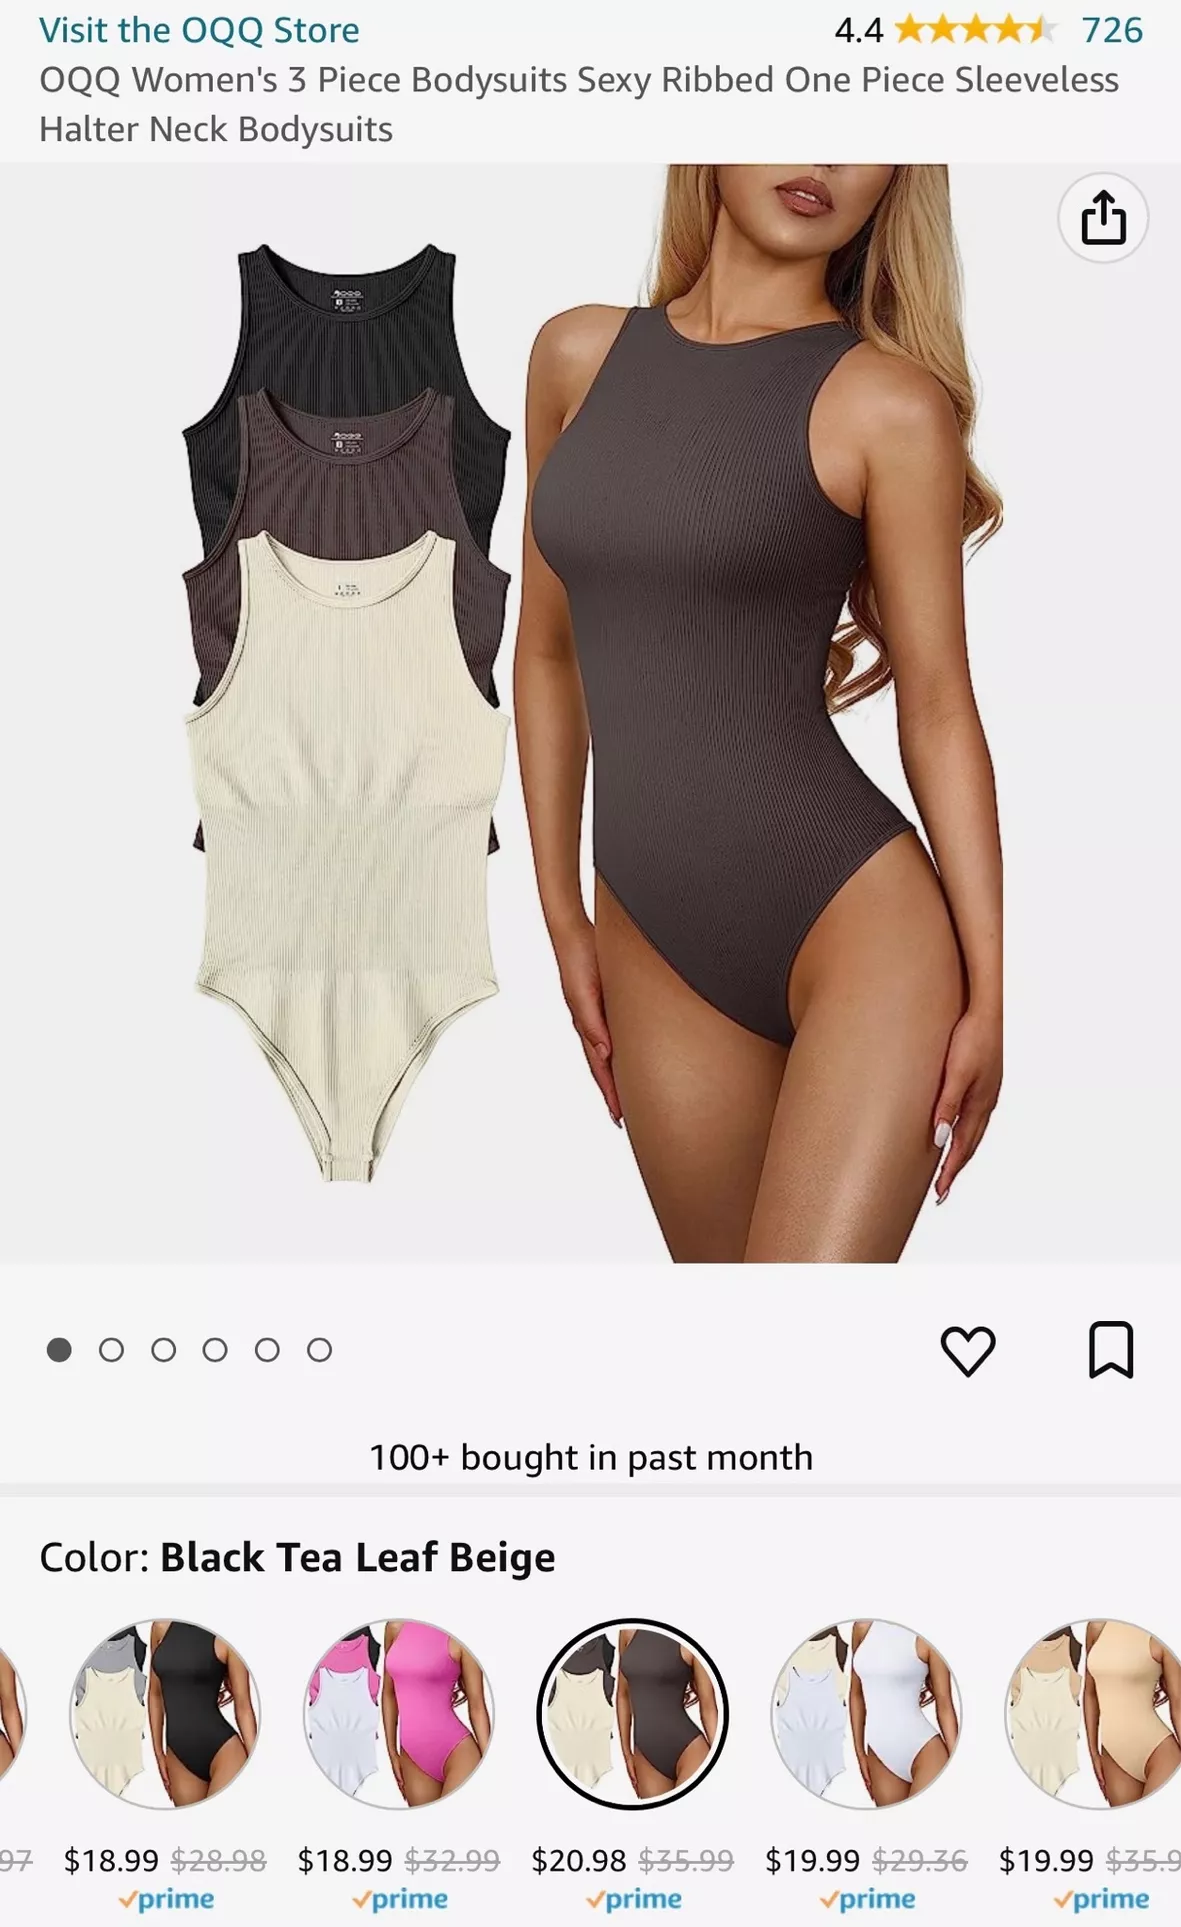 Women's 3 Piece Bodysuits, Sexy Ribbed Sleeveless One Piece Halter